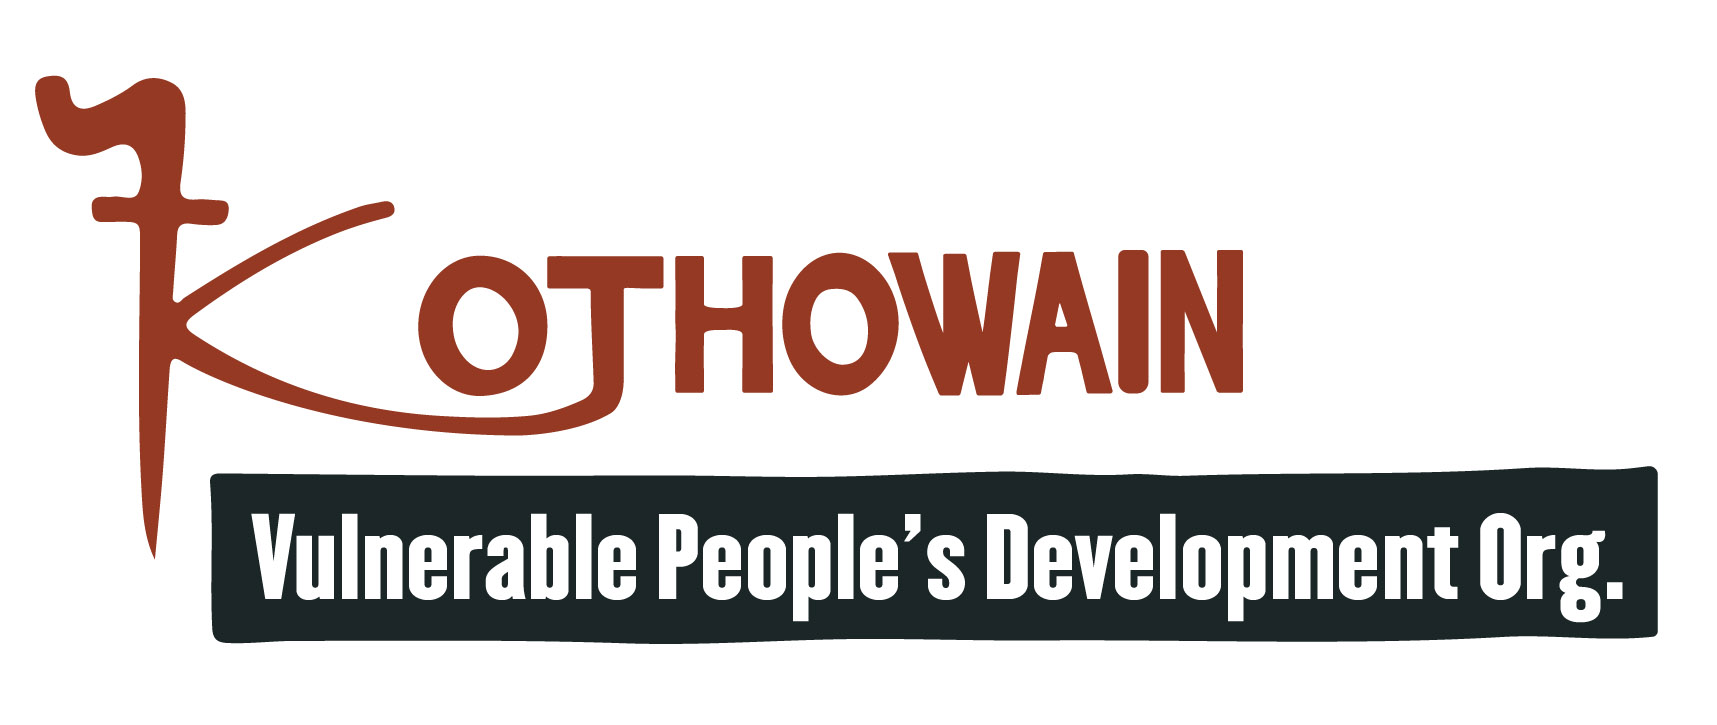 KOTHOWAIN (Vulnerable People's Development Organization)